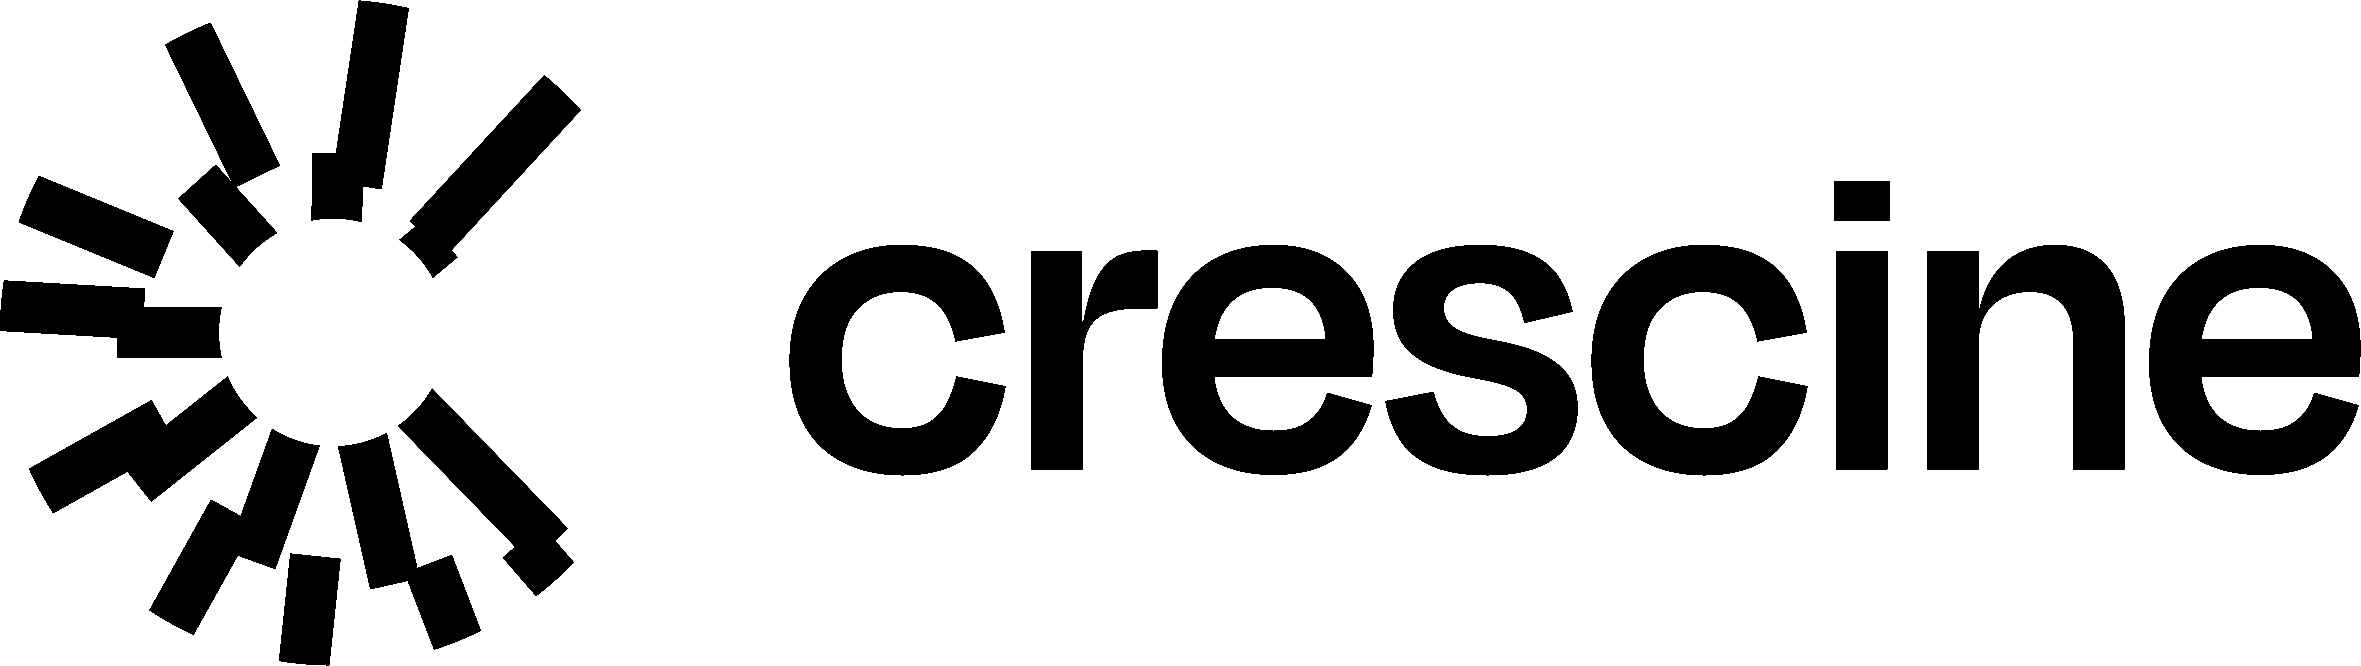 crescine-logo-black